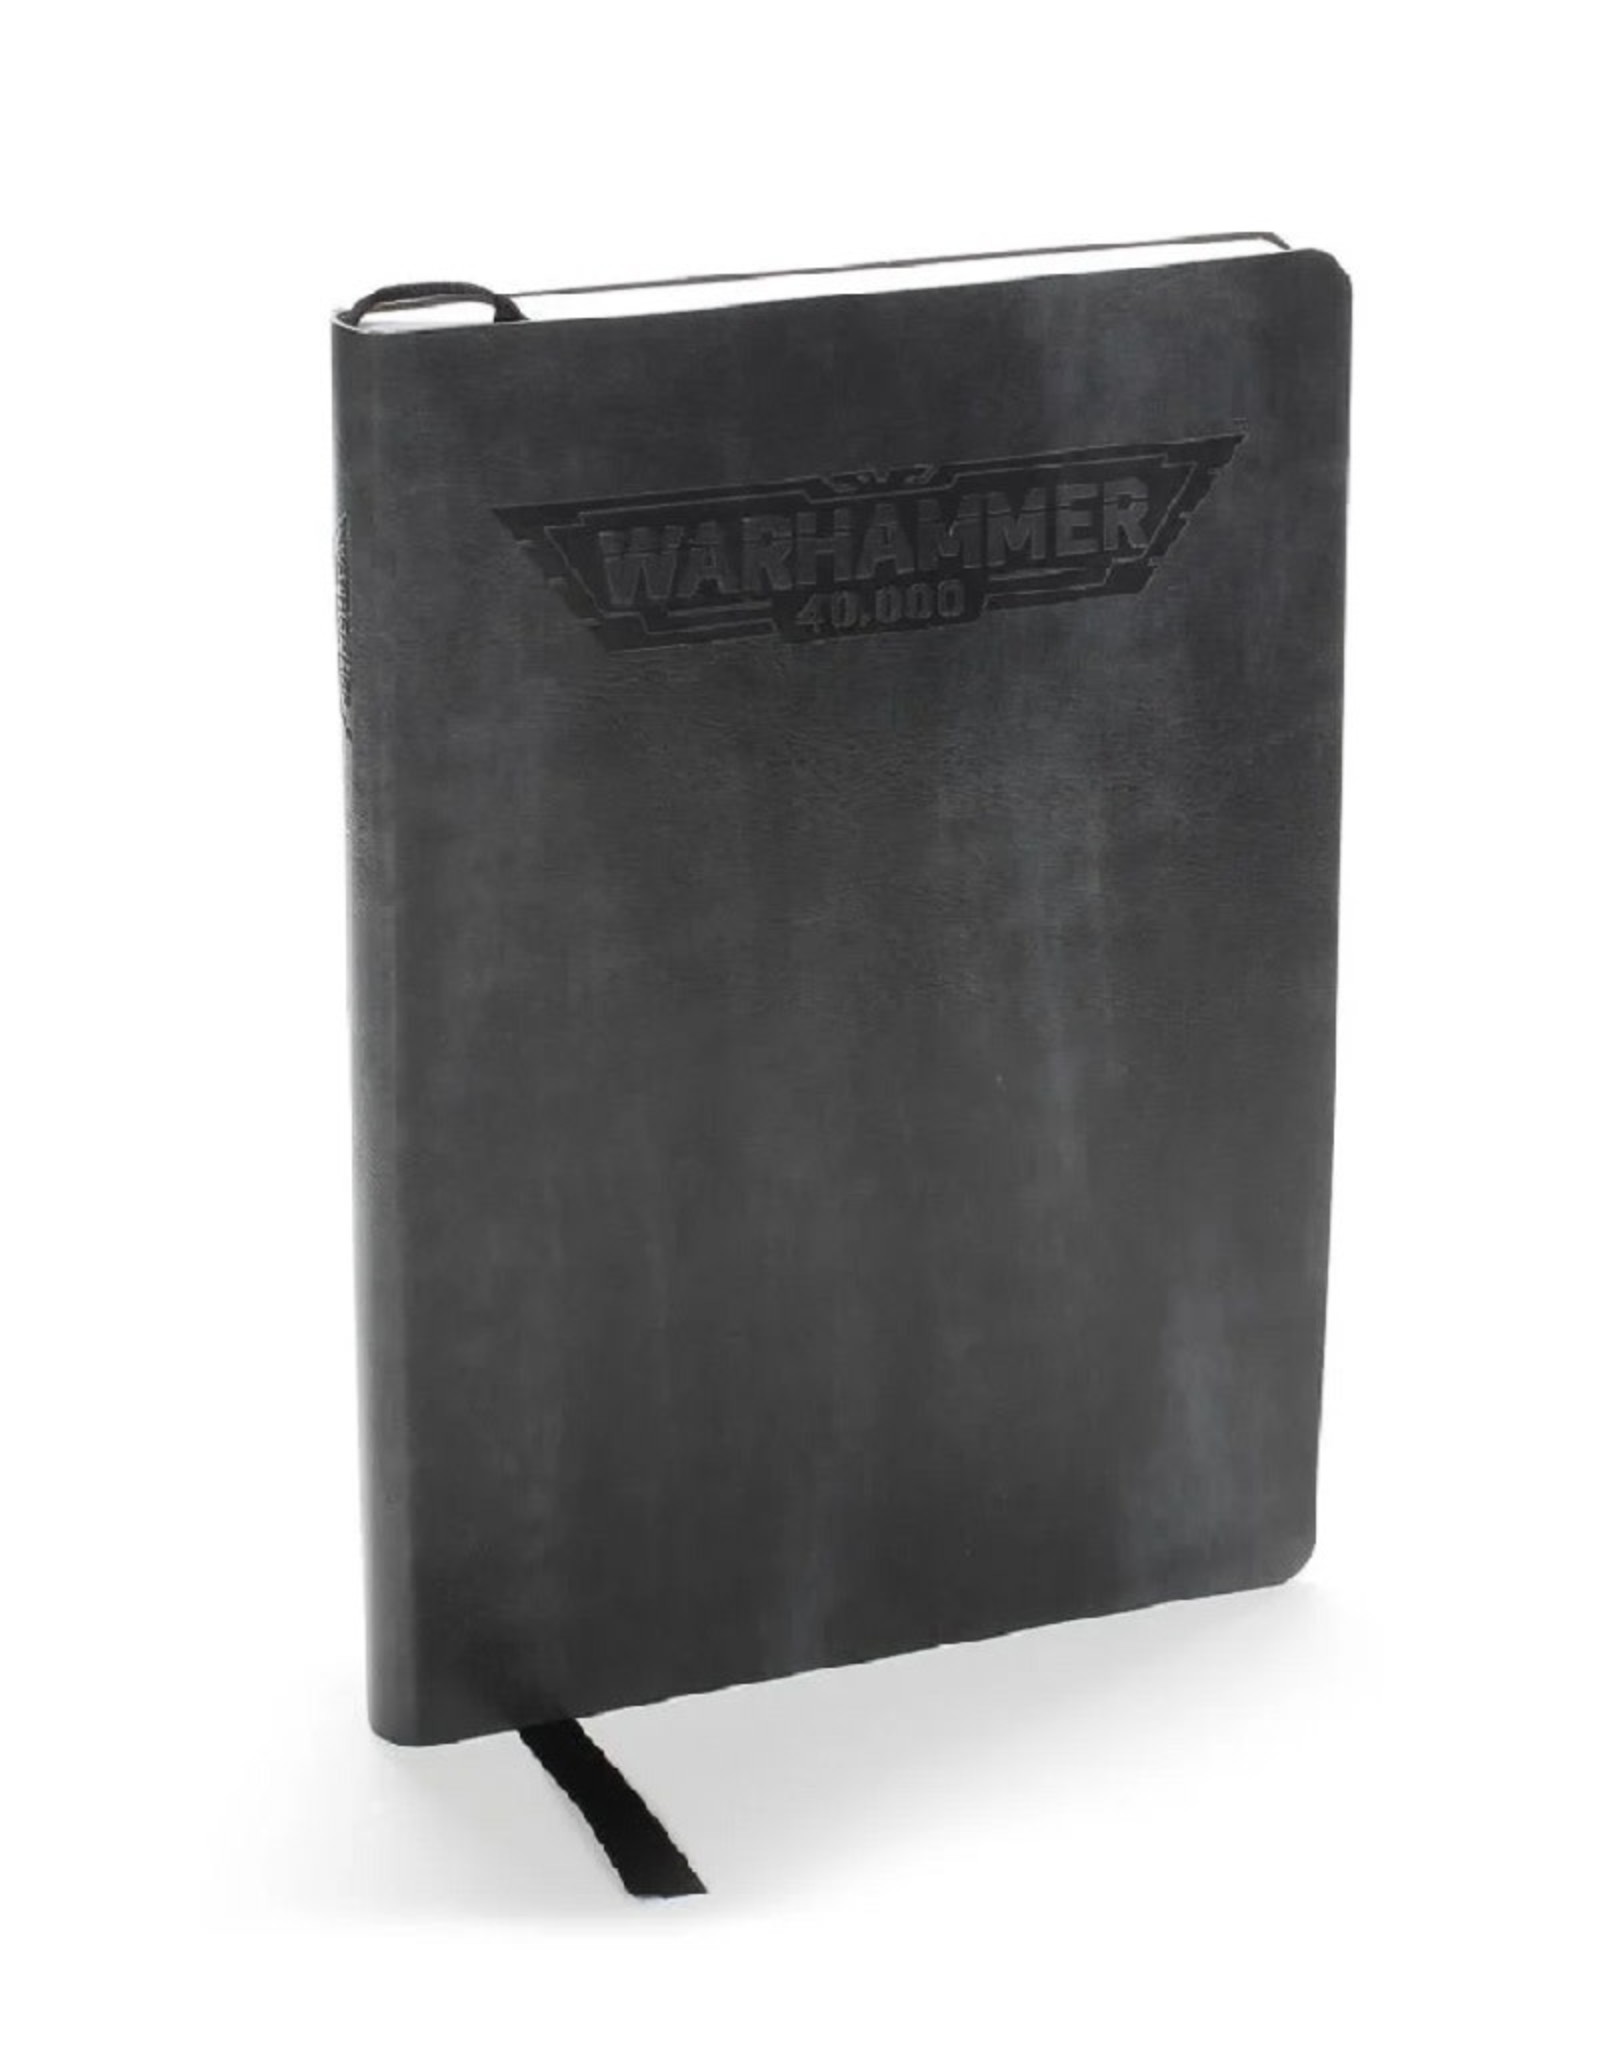 Games Workshop Warhammer 40,000 Crusade Journal